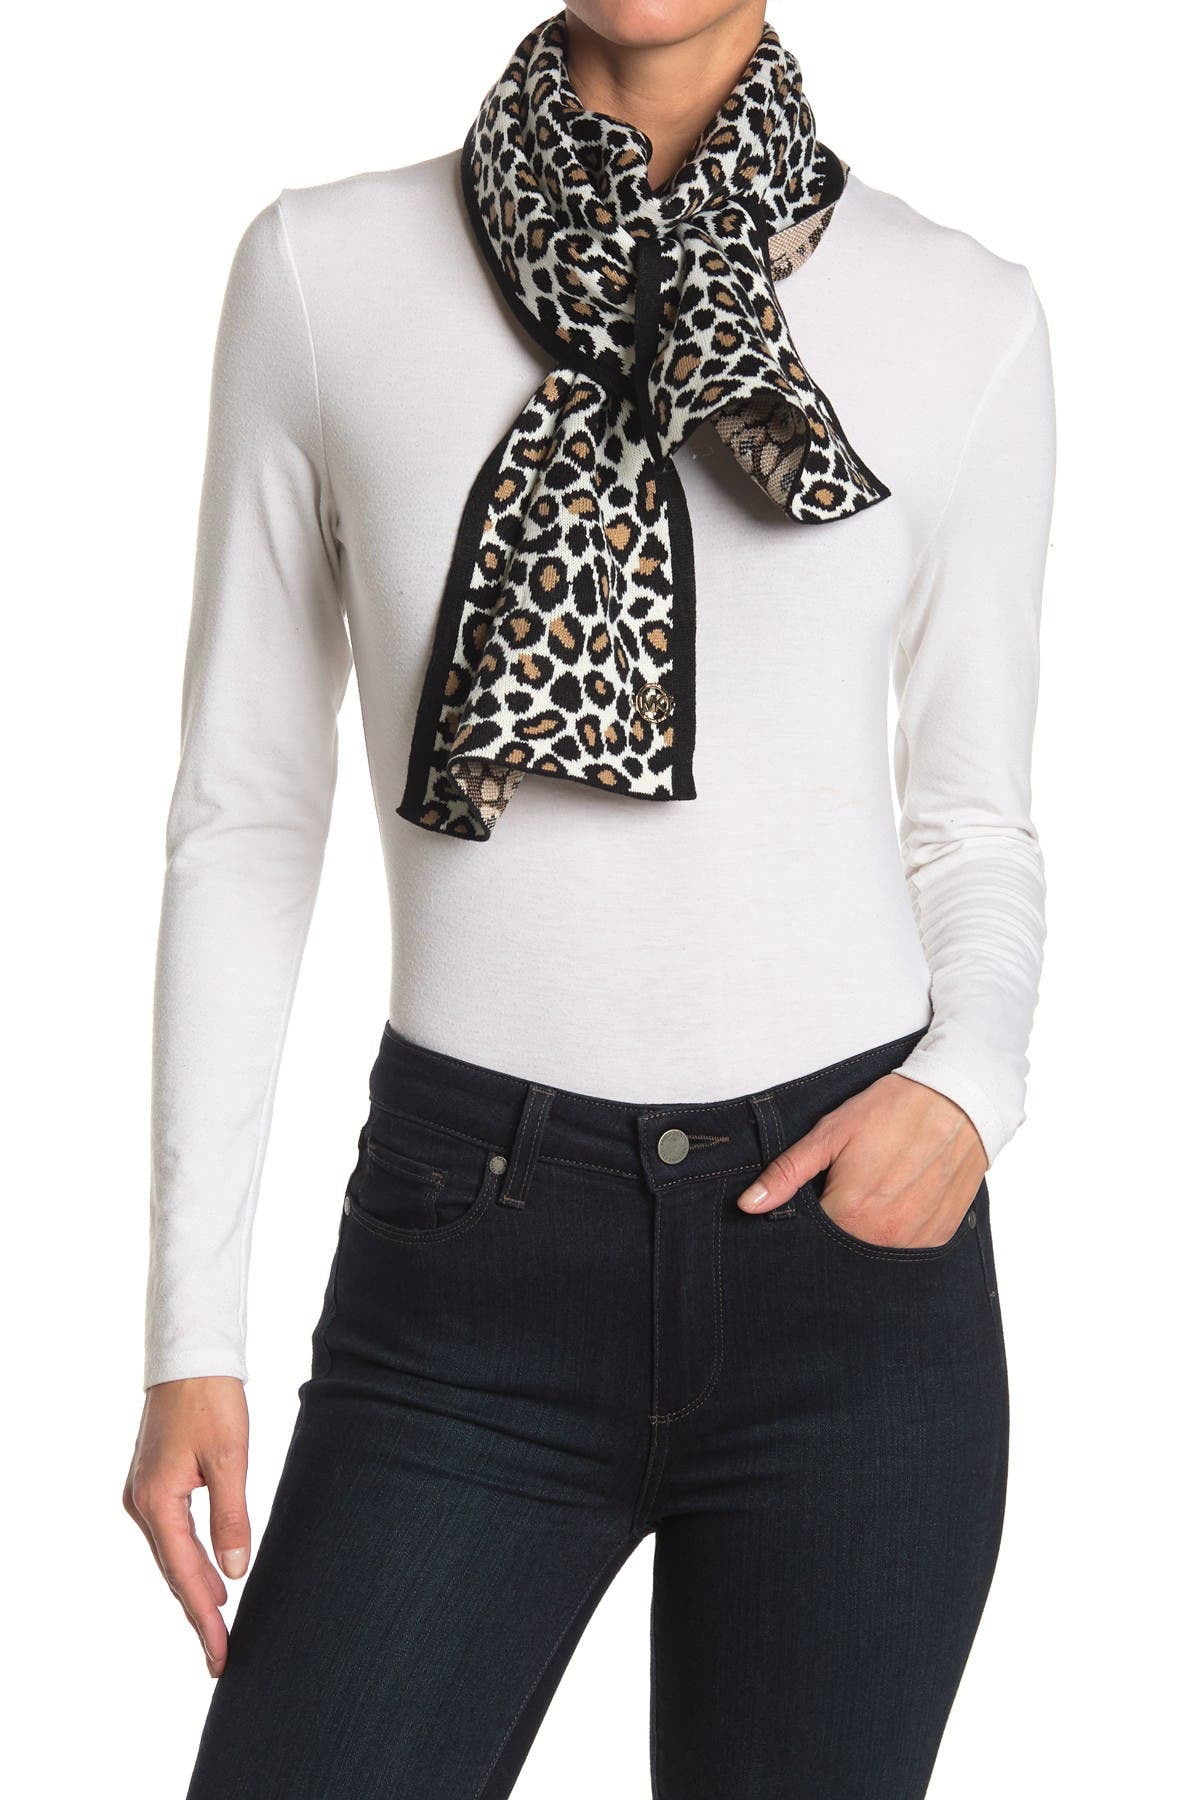 Ladies Soft Silk Blend Animal Leopard Soft Tie-Dye Neck Scarf /Wrap 